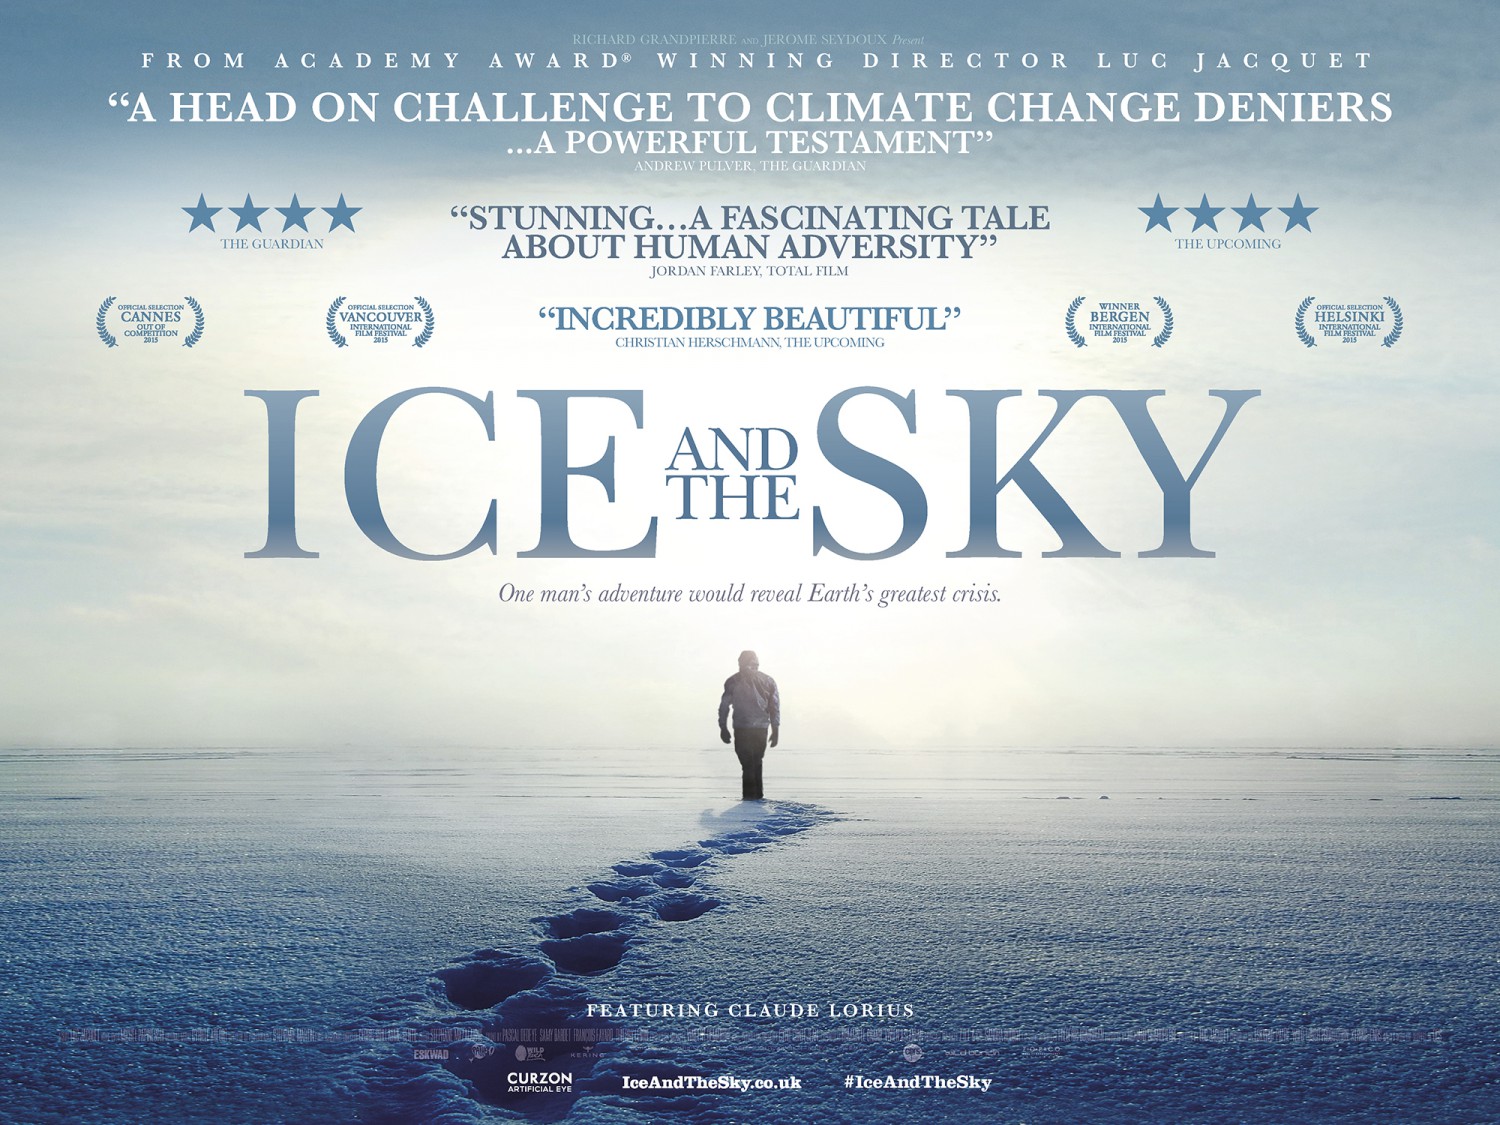 Extra Large Movie Poster Image for La glace et le ciel (#2 of 3)